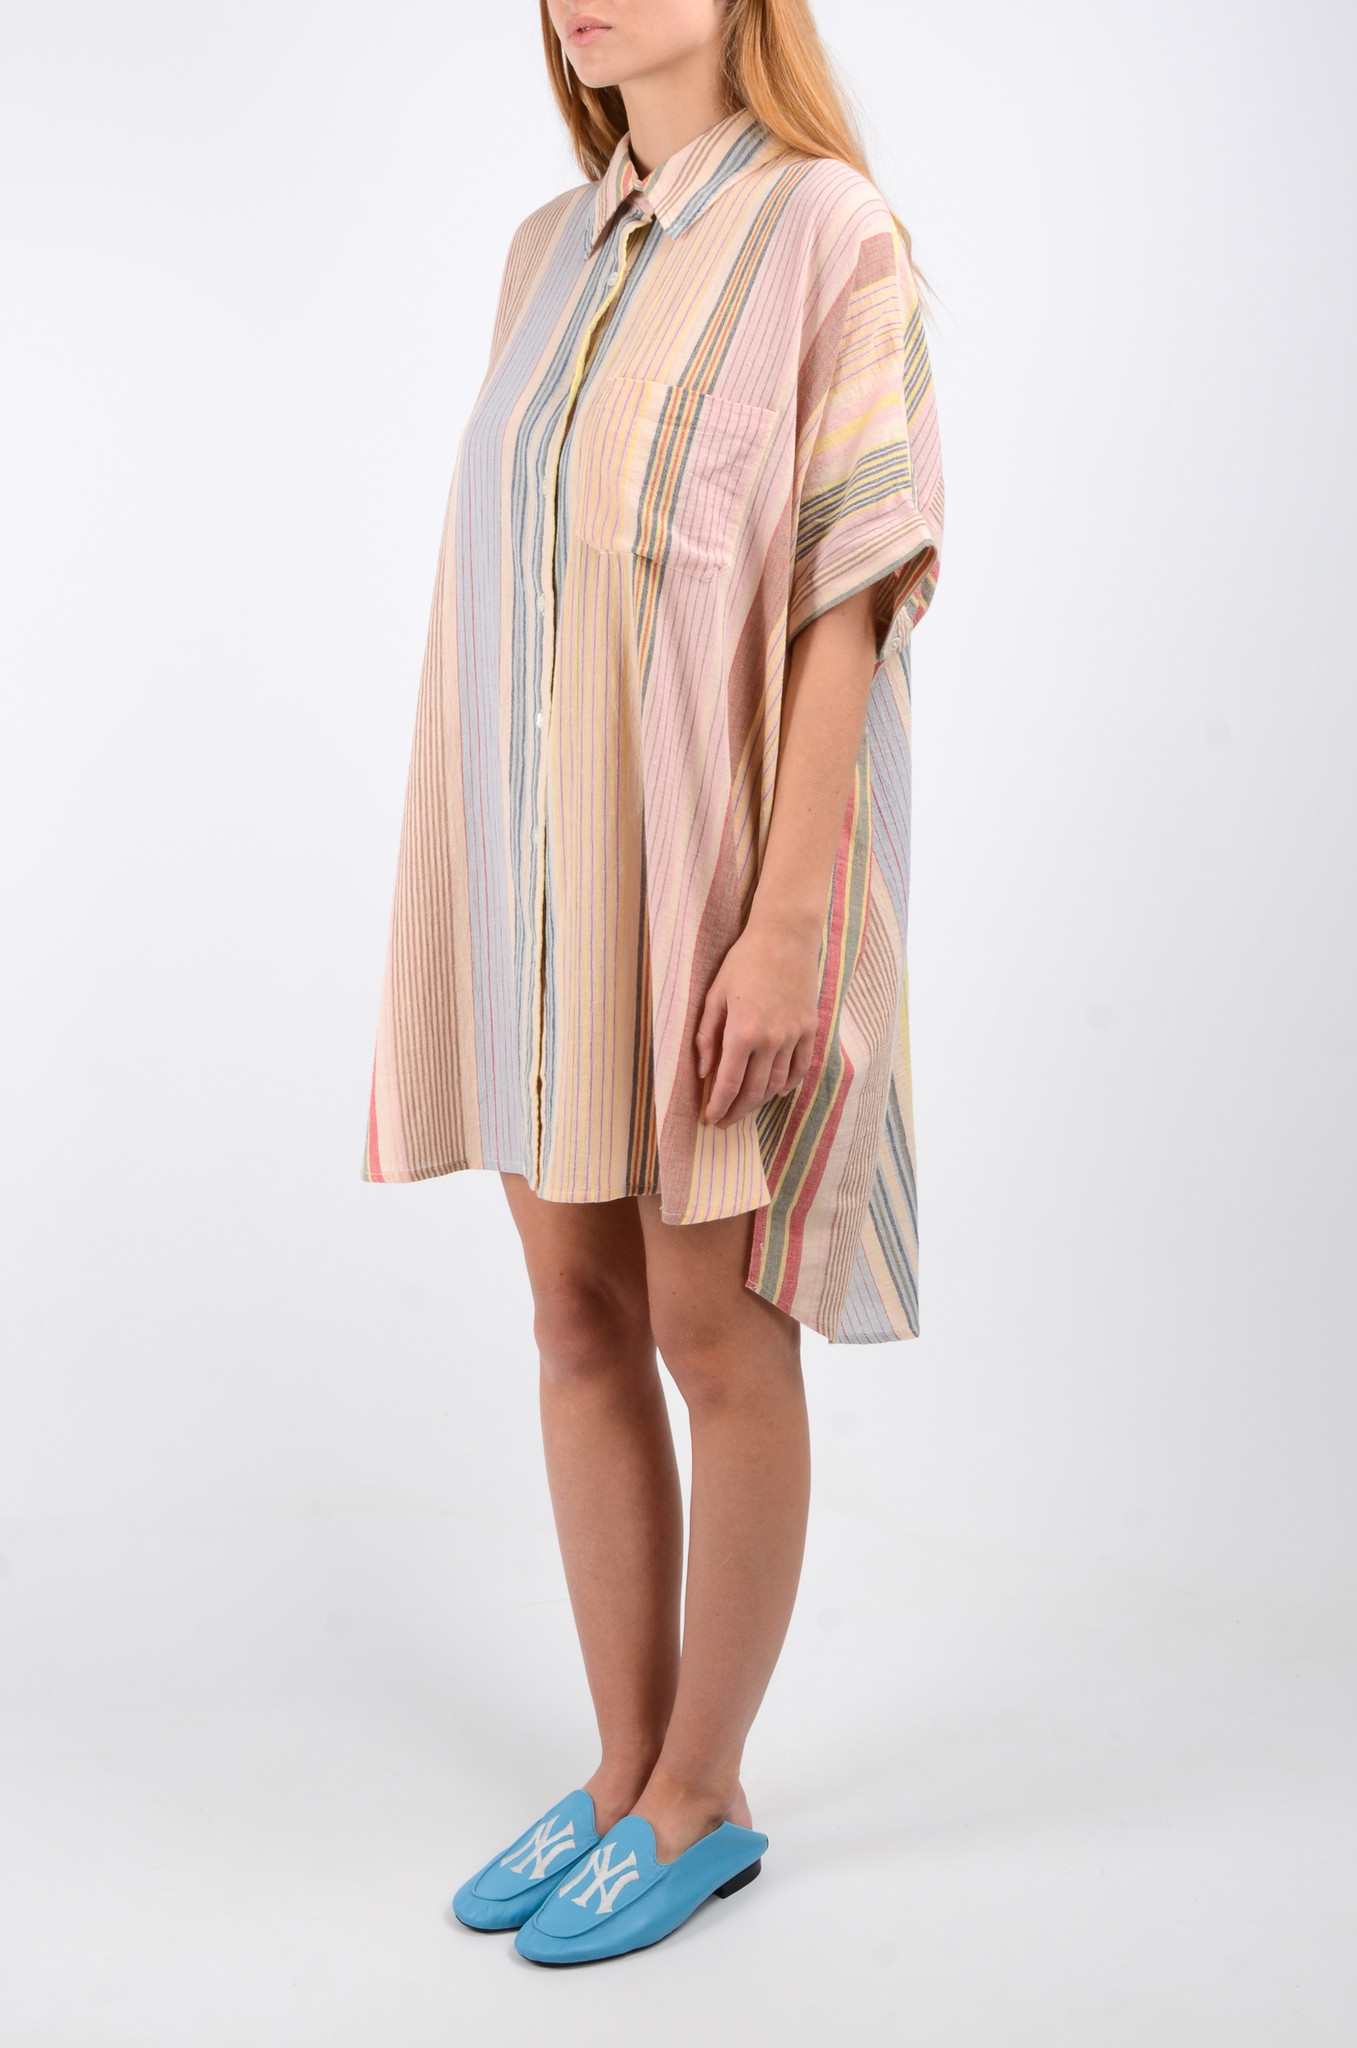 Cassia Dress in Multi Stripes-4